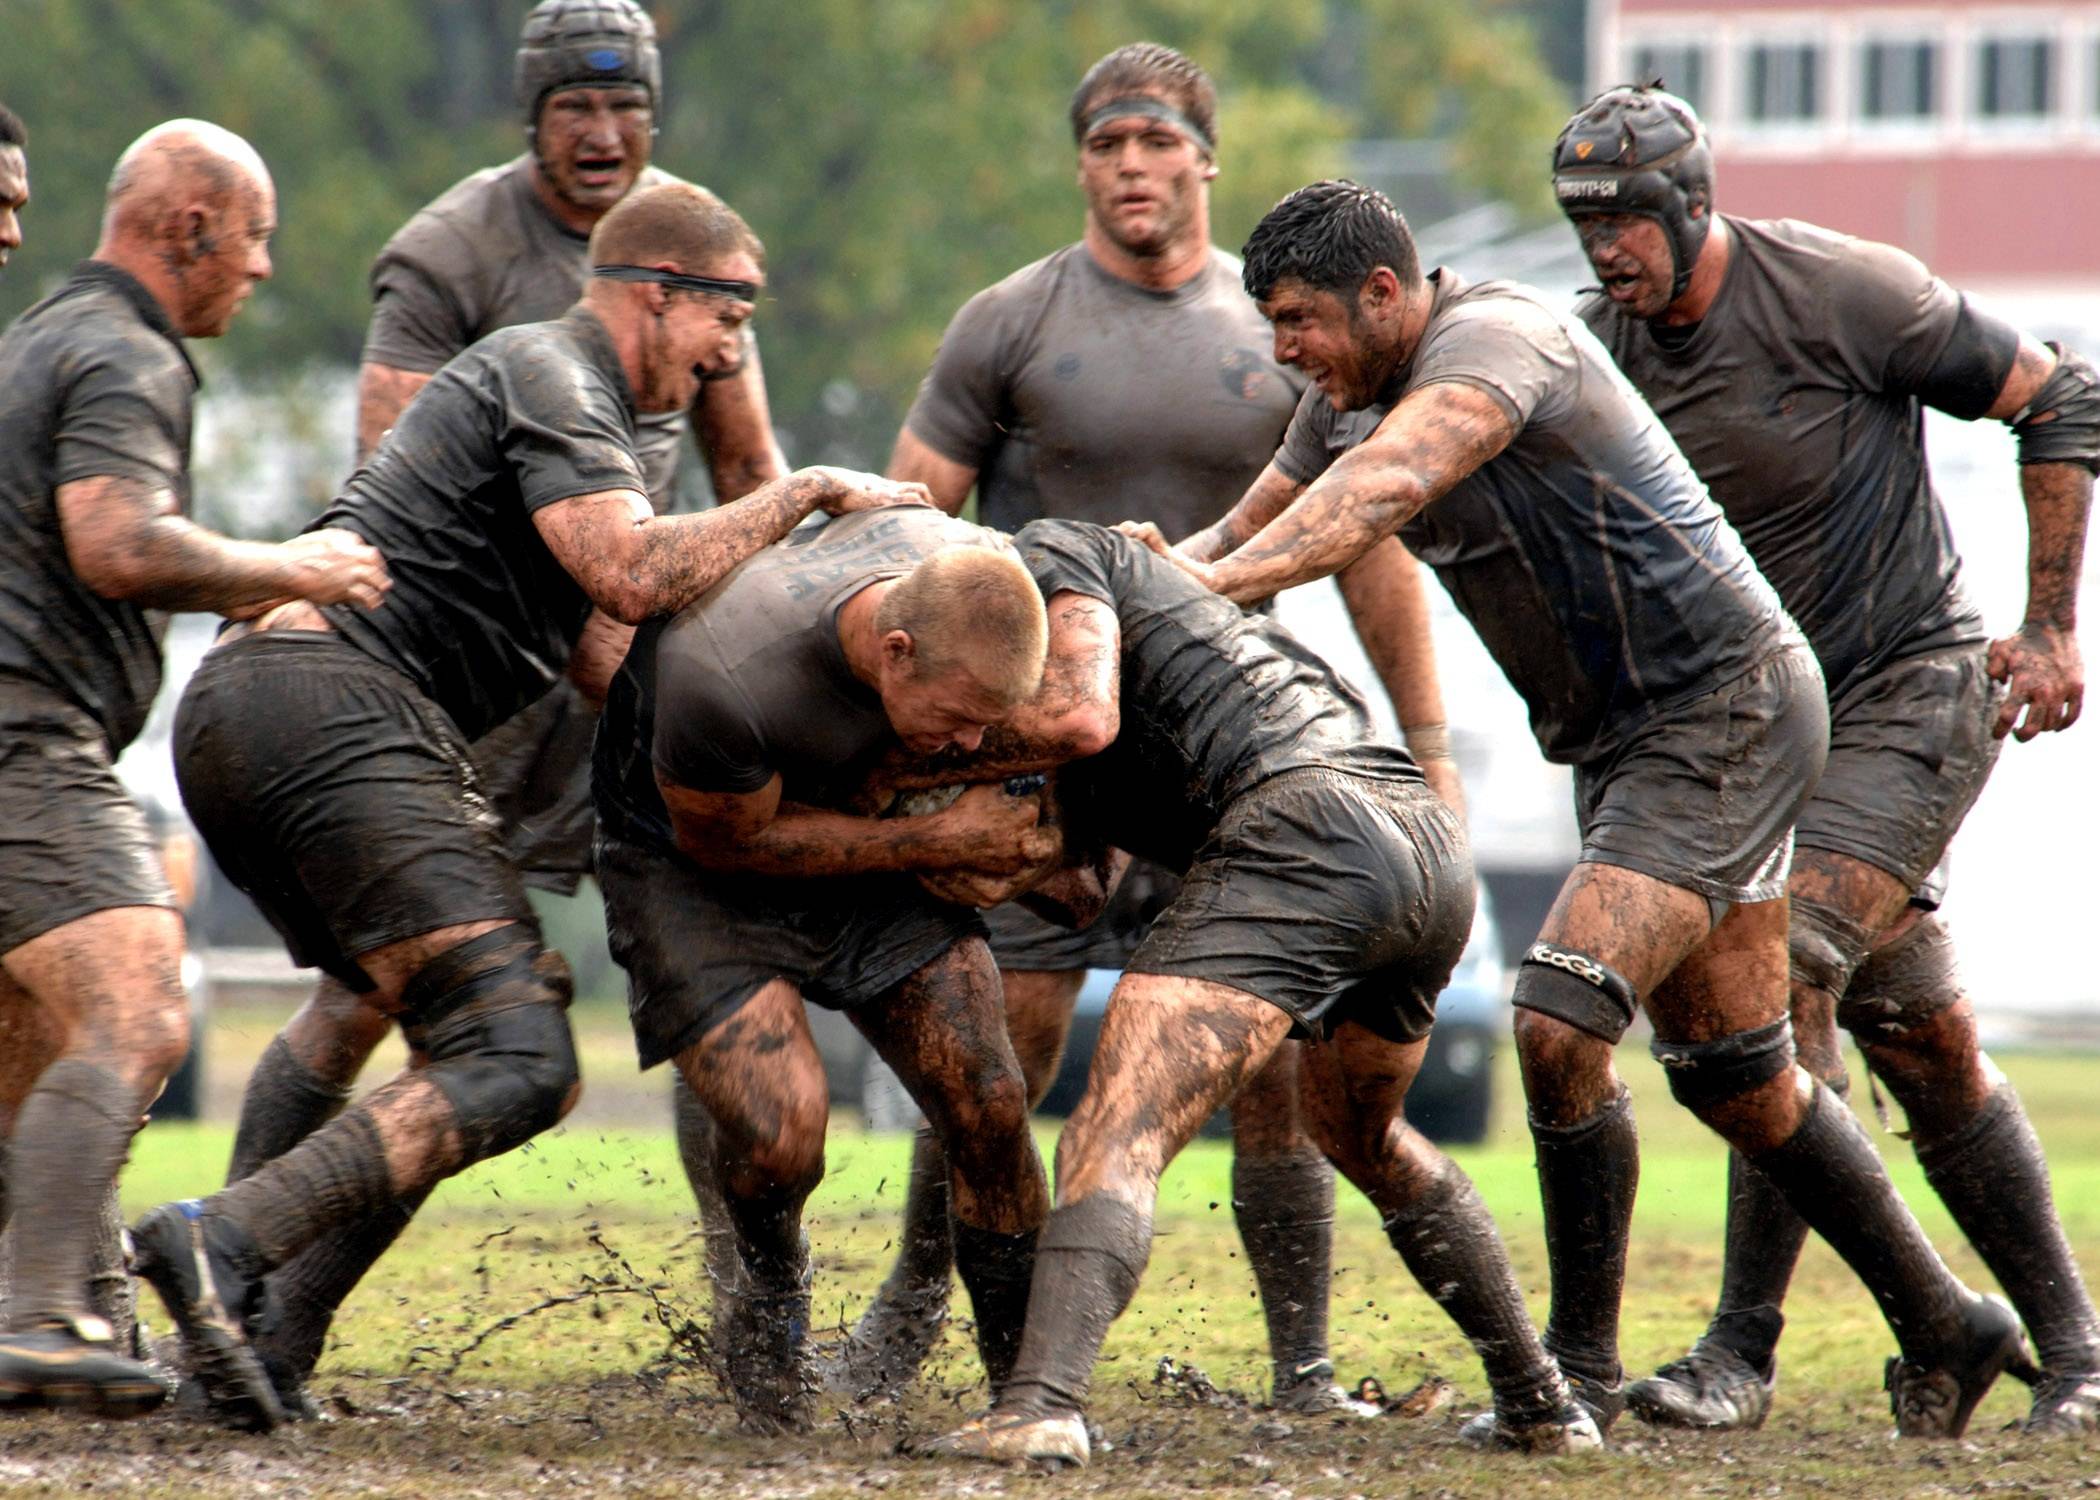 rugby : un sport de contact